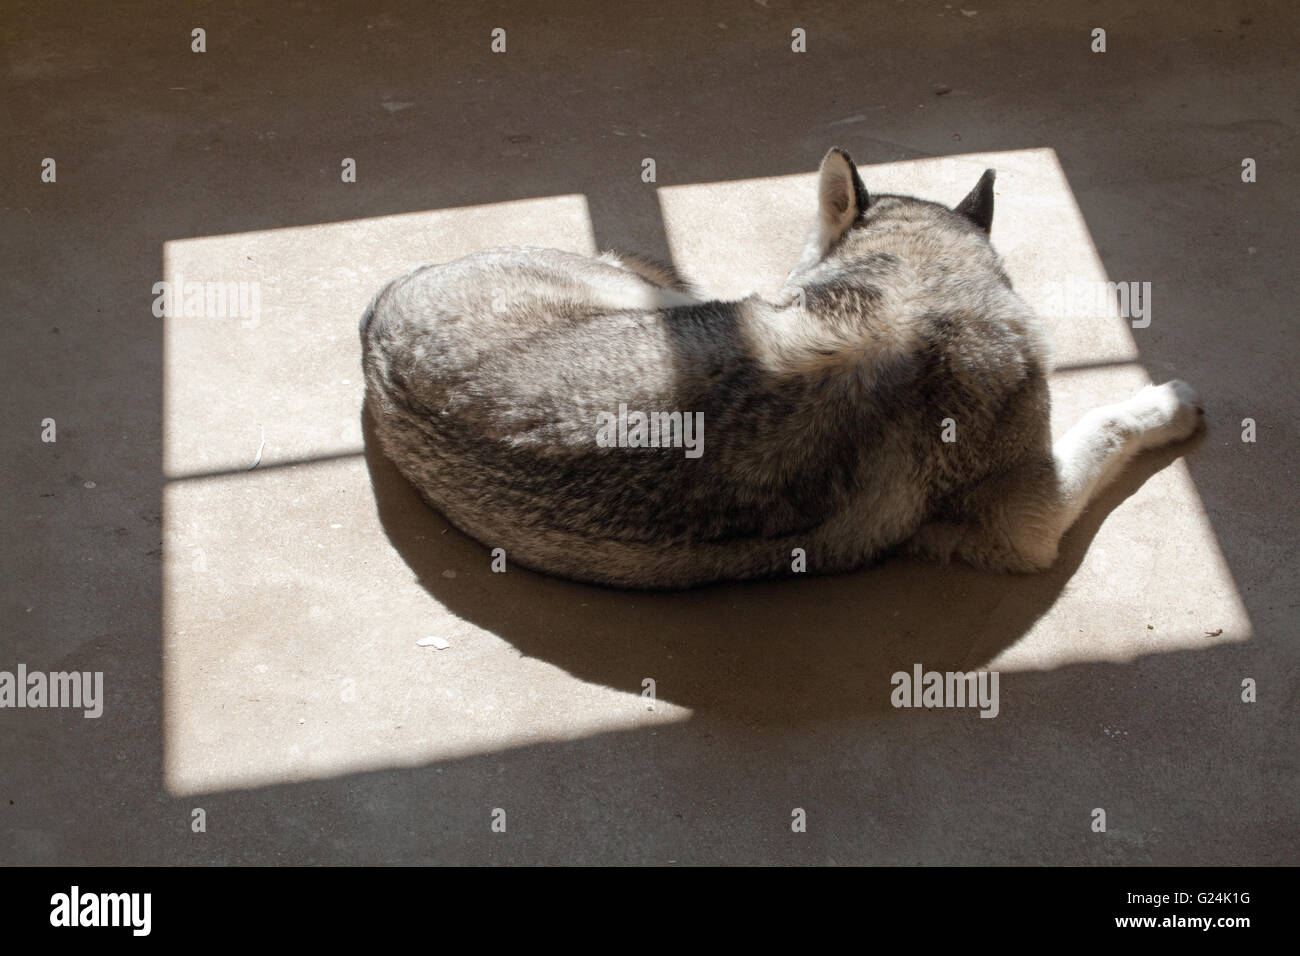 Dog, a Siberian Husky (Canis lupus familiaris), seeking warmth of sunlight shining through a window frame onto a concrete floor. Stock Photo